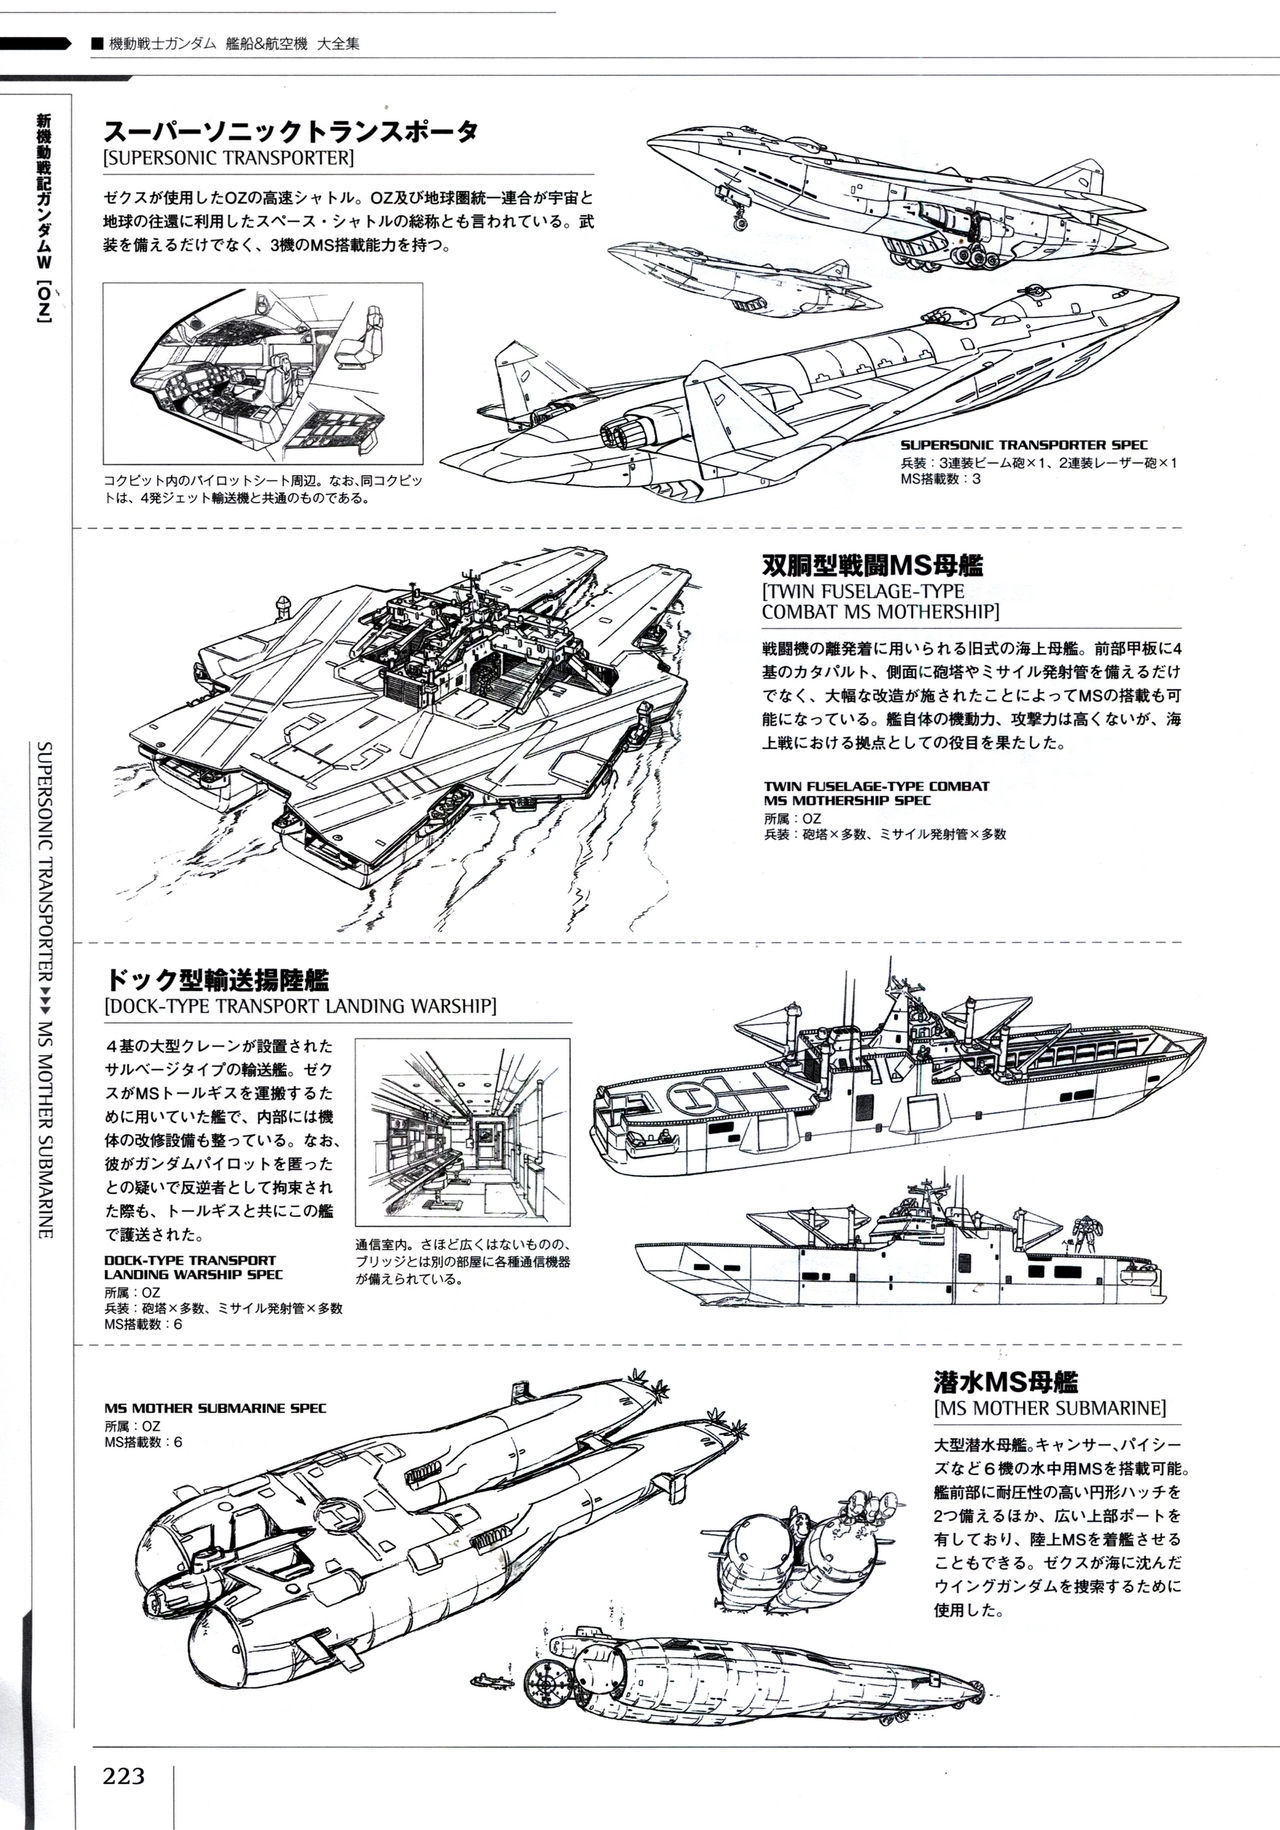 Mobile Suit Gundam - Ship & Aerospace Plane Encyclopedia - Revised Edition 228